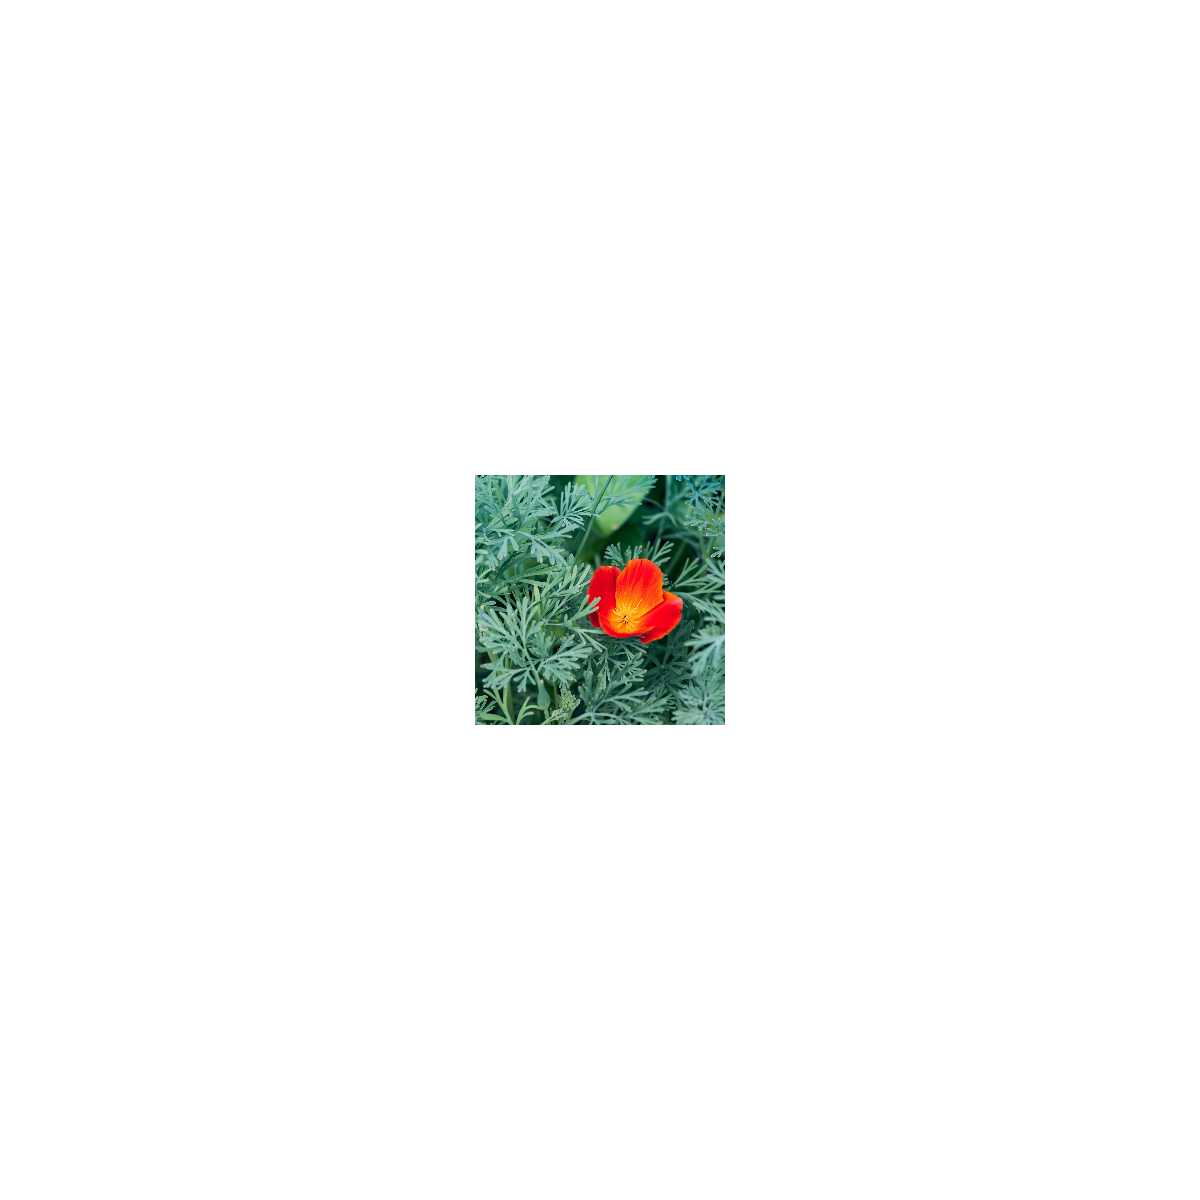 Sluncovka kalifornská červená - Eschscholzia californica - osivo sluncovky - 450 ks